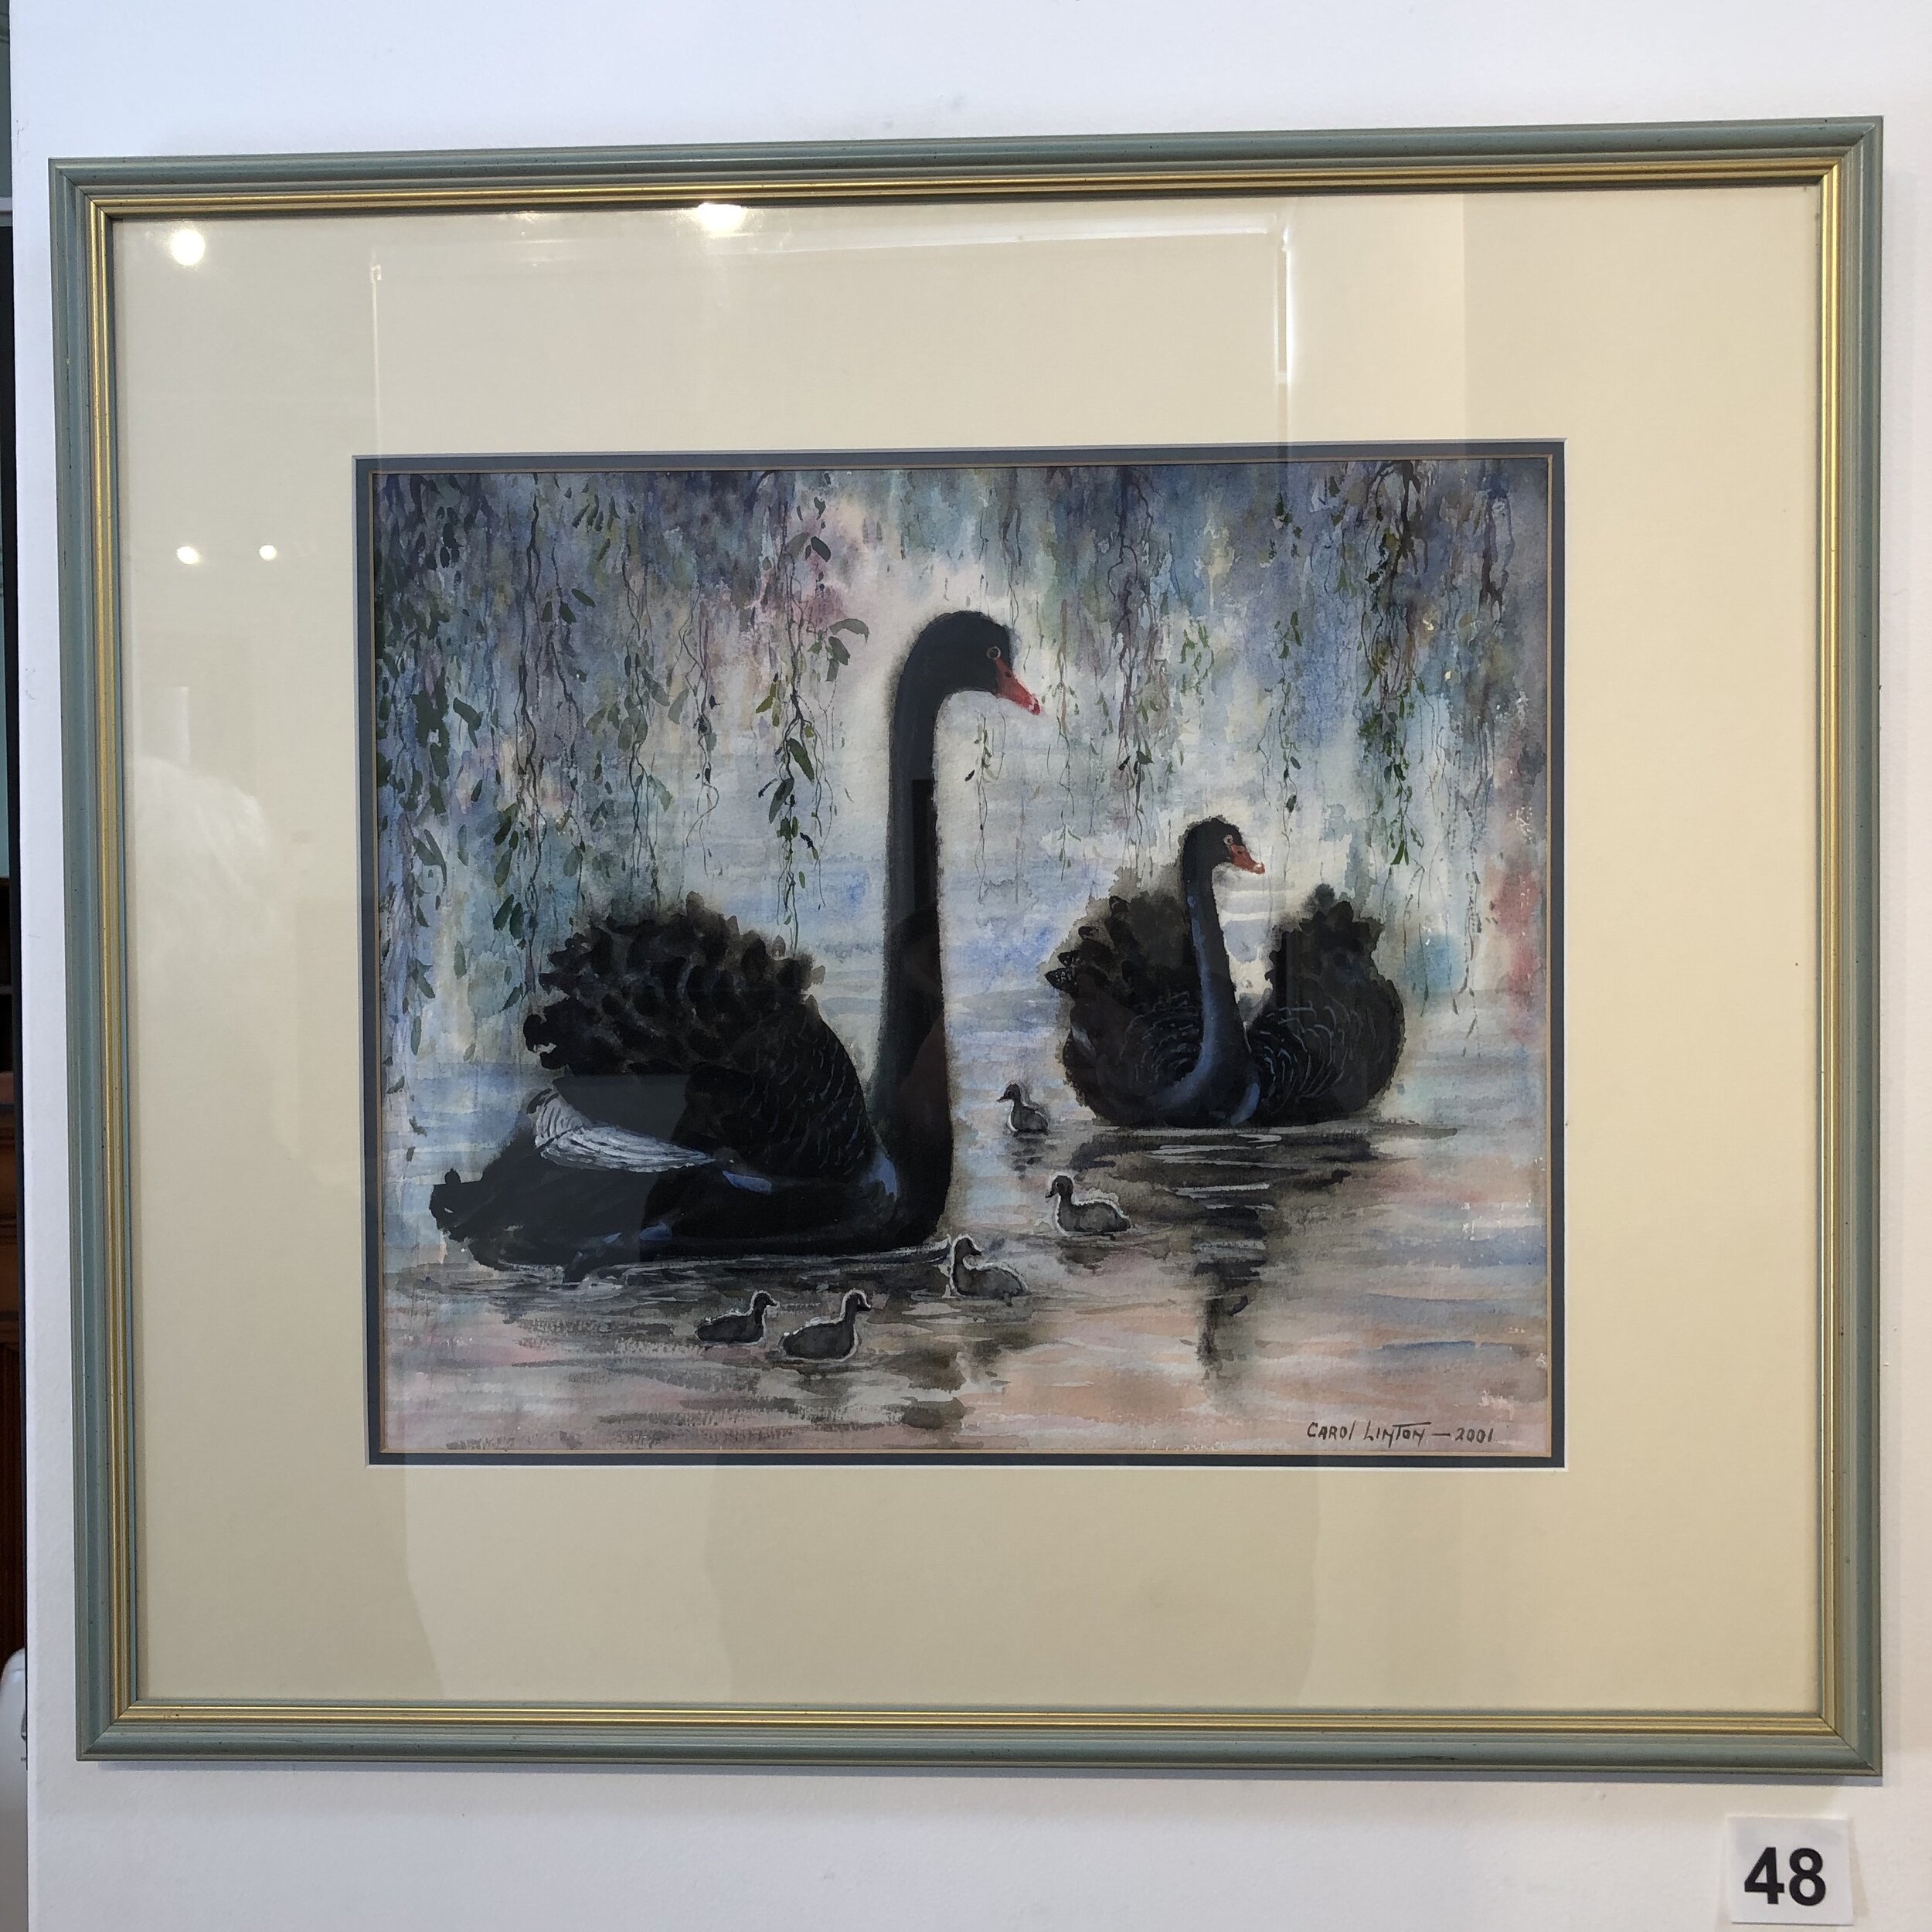 "Black Swans" by Carol Linton